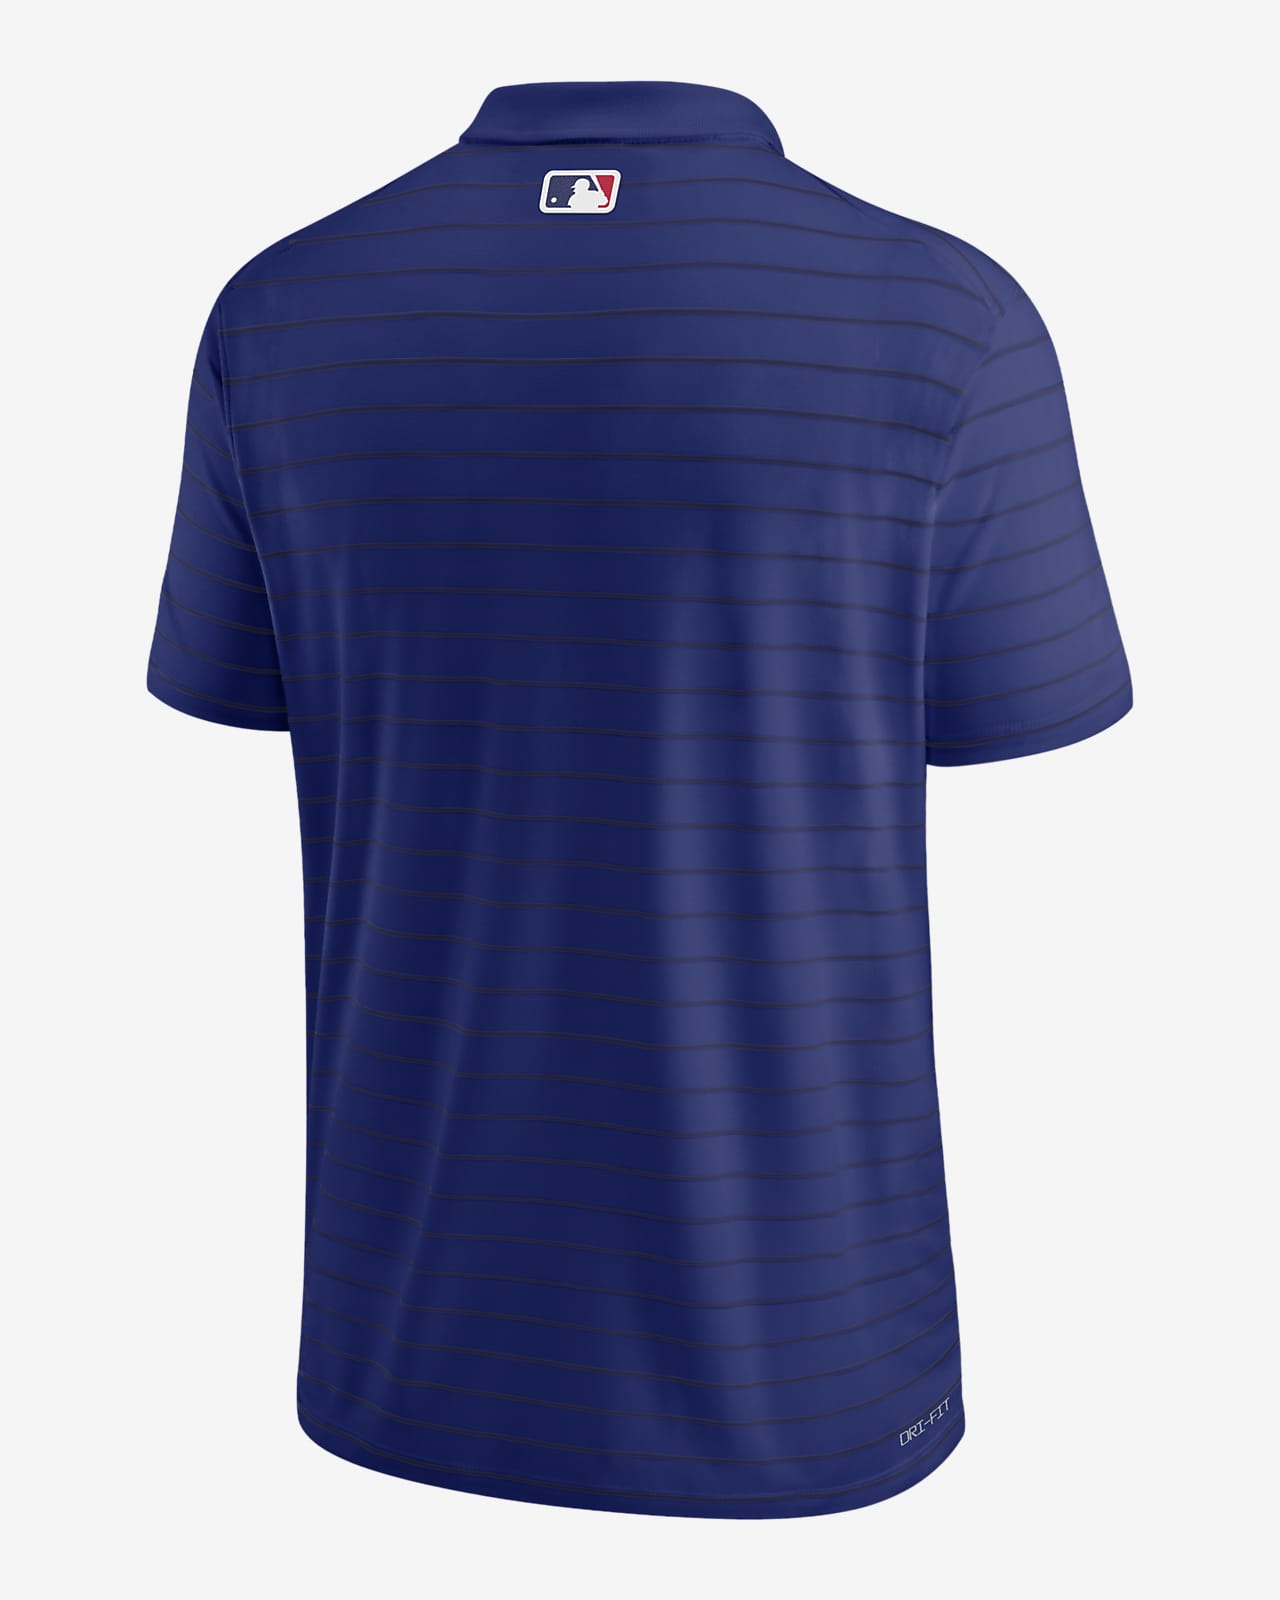 Official Texas Rangers Polos, Rangers Golf Shirts, Dress Shirts